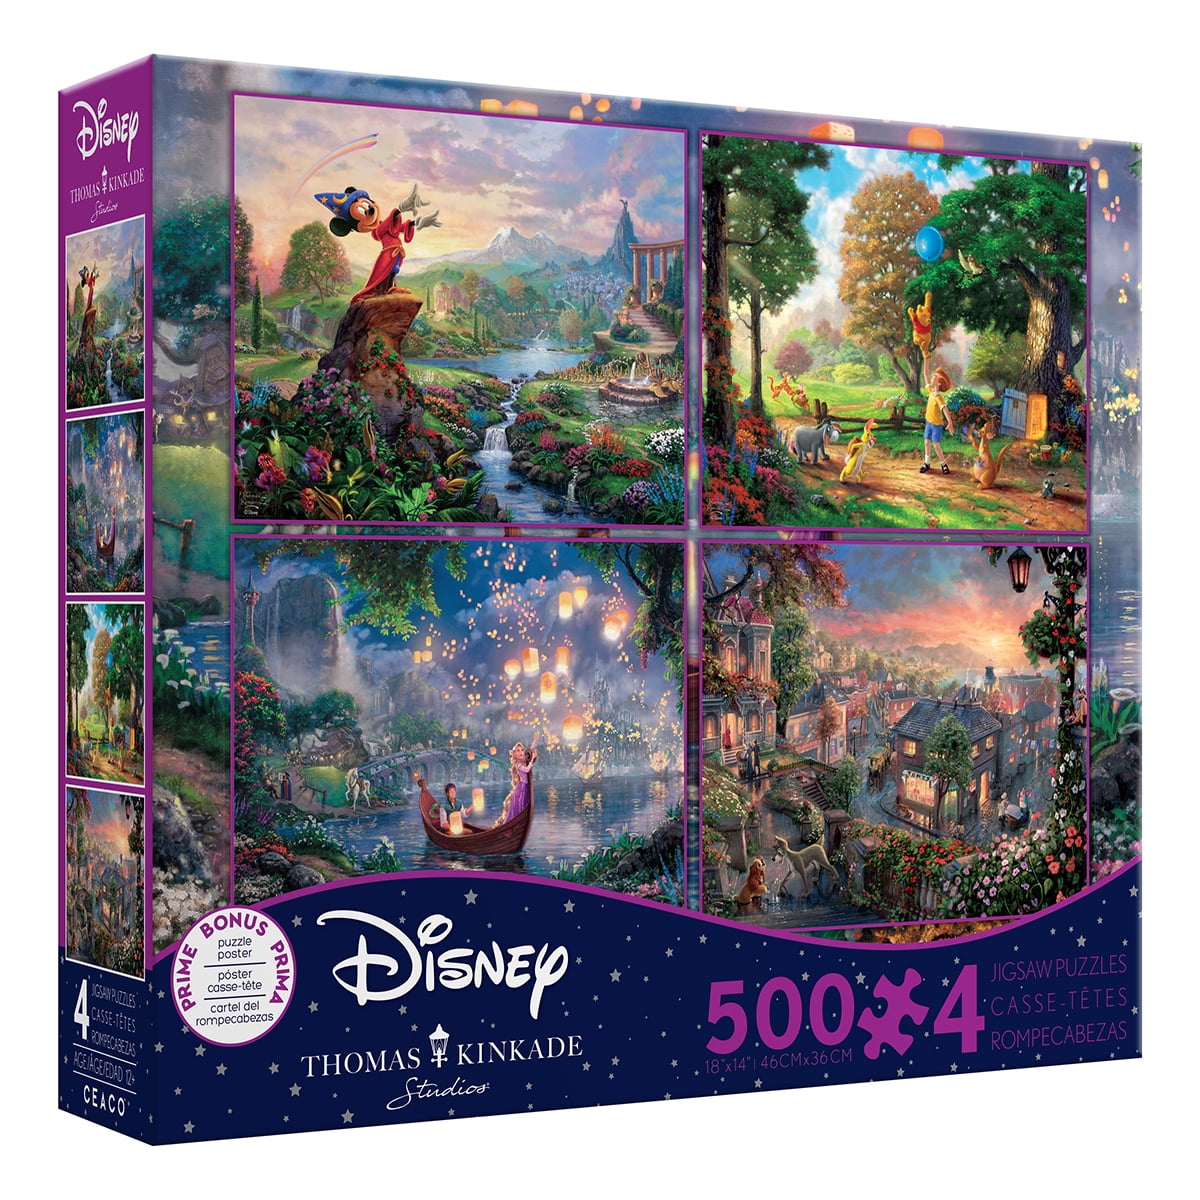 Details about   Lot of 2 Disney 500 Piece Puzzles Princess New 